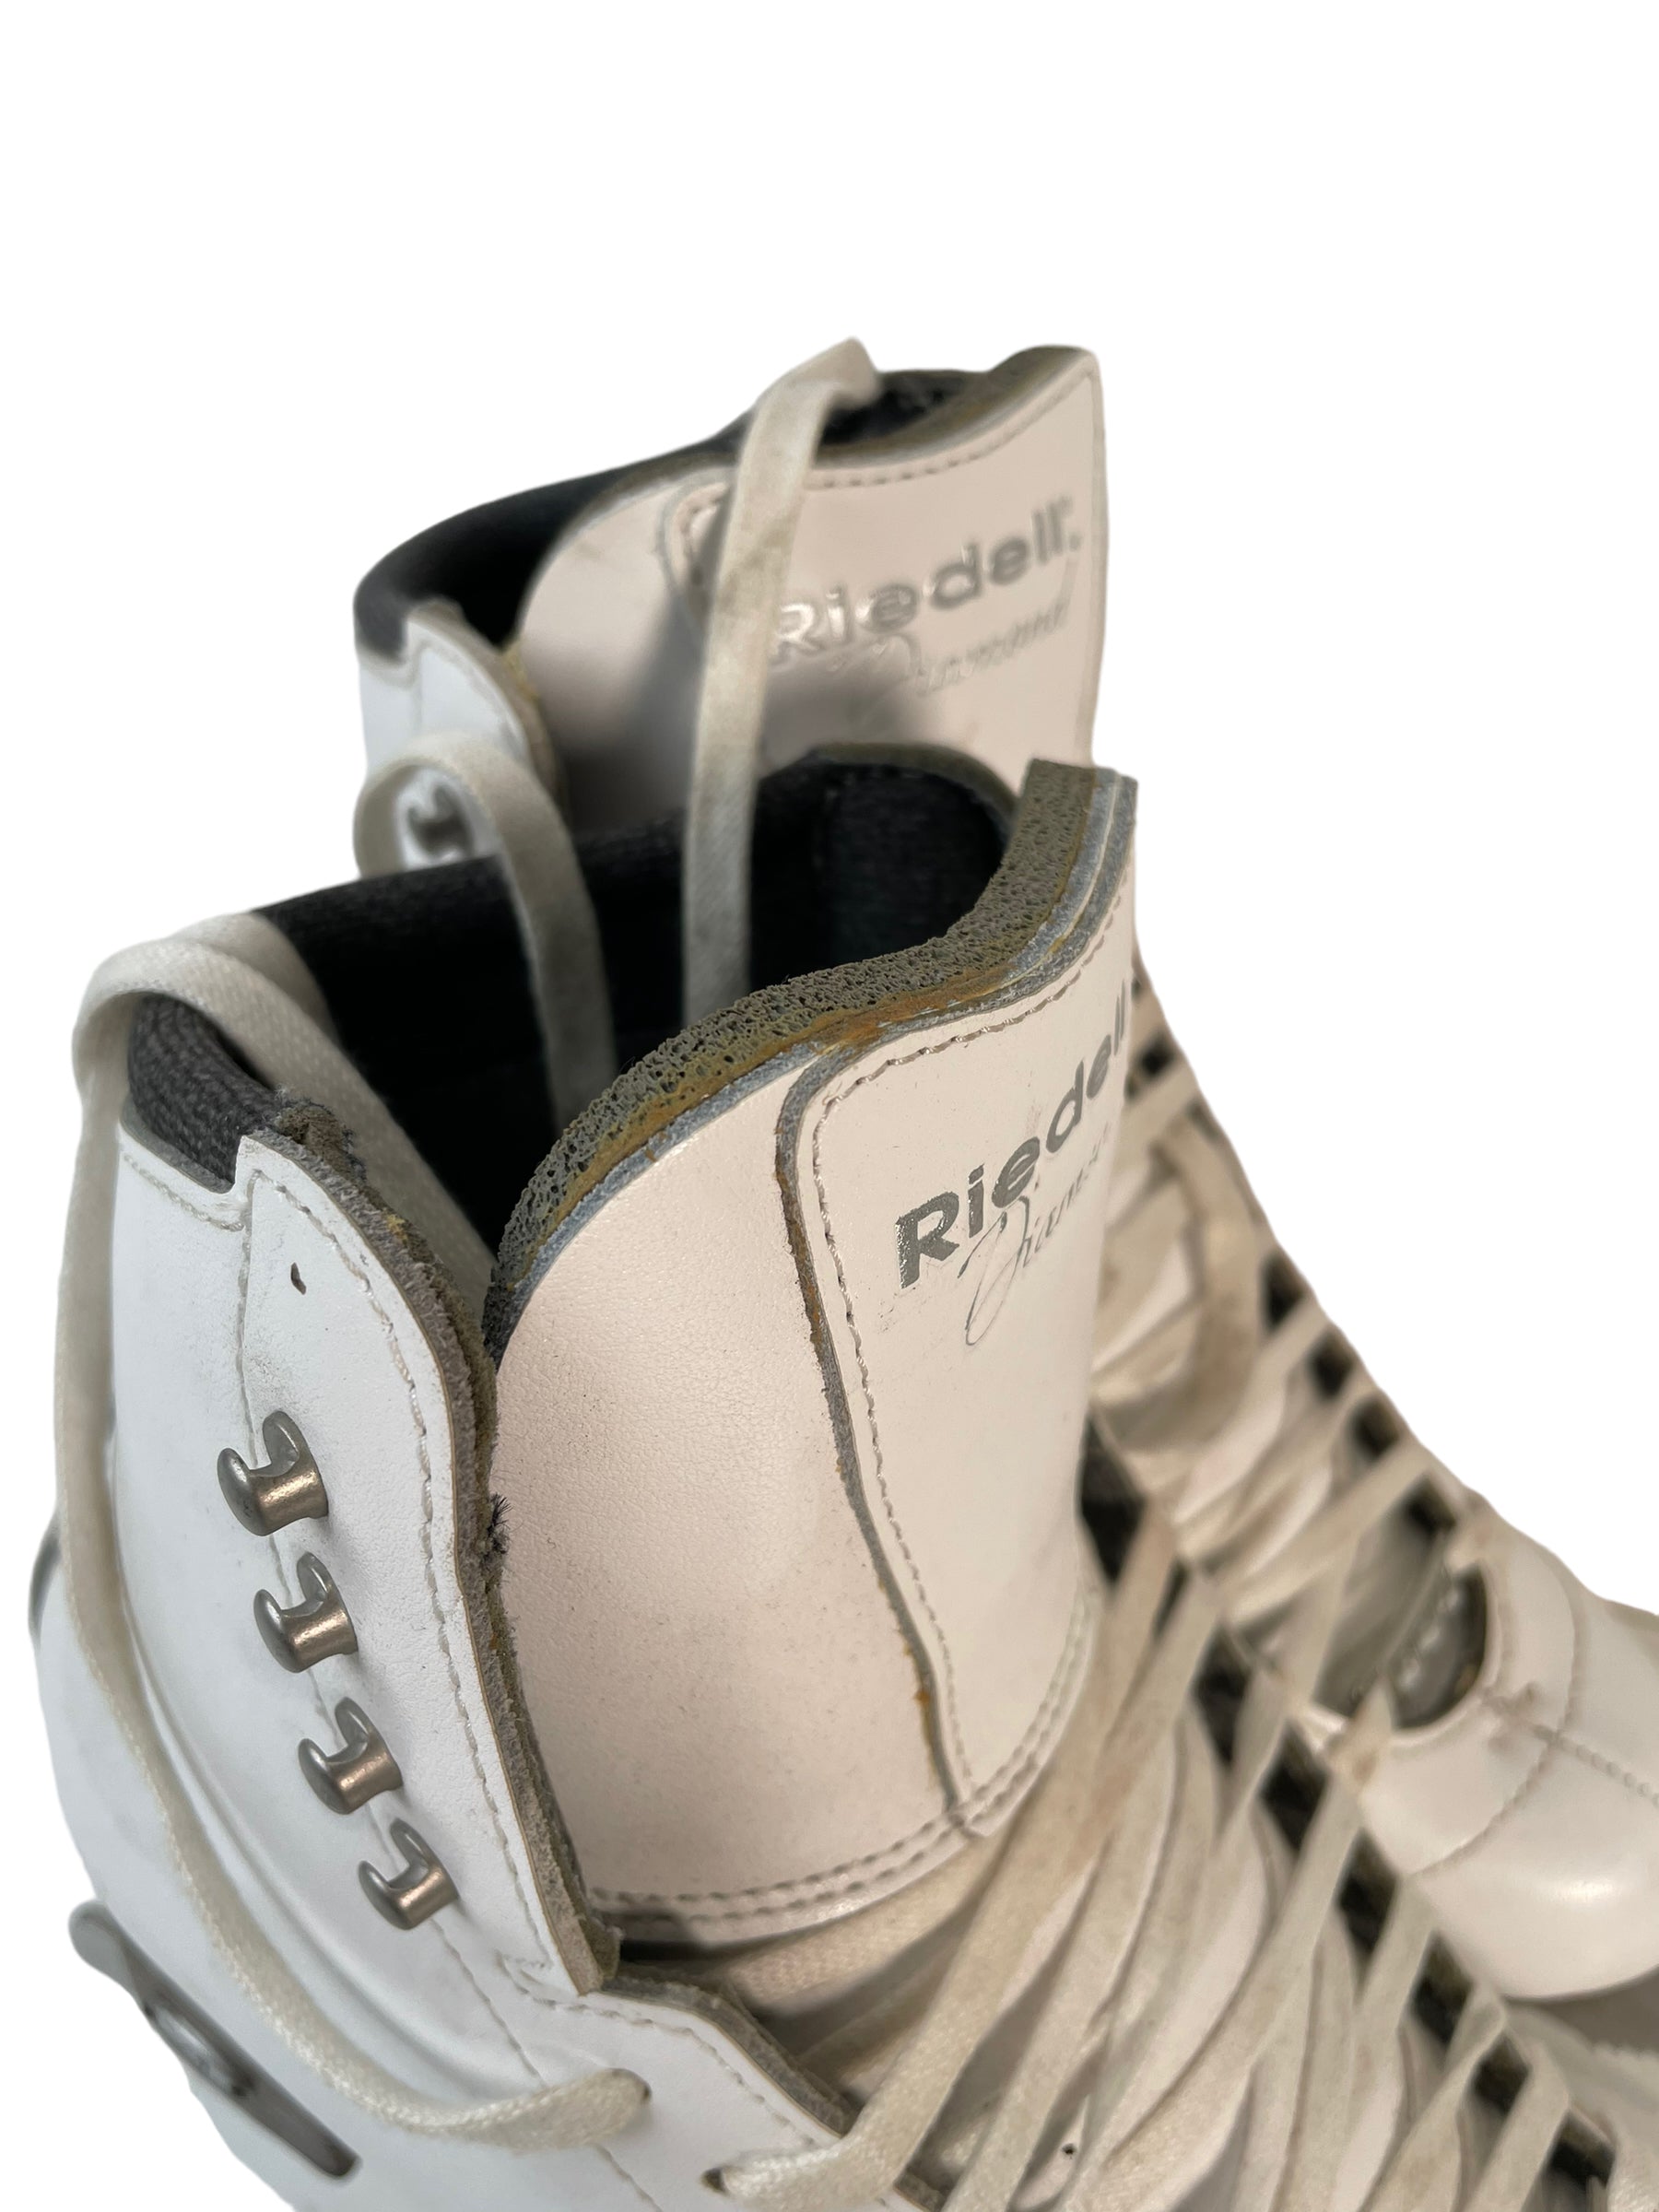 Used Riedell Diamond Figure Skates in size 5 (Model 133) featuring Eclipse Capri blades